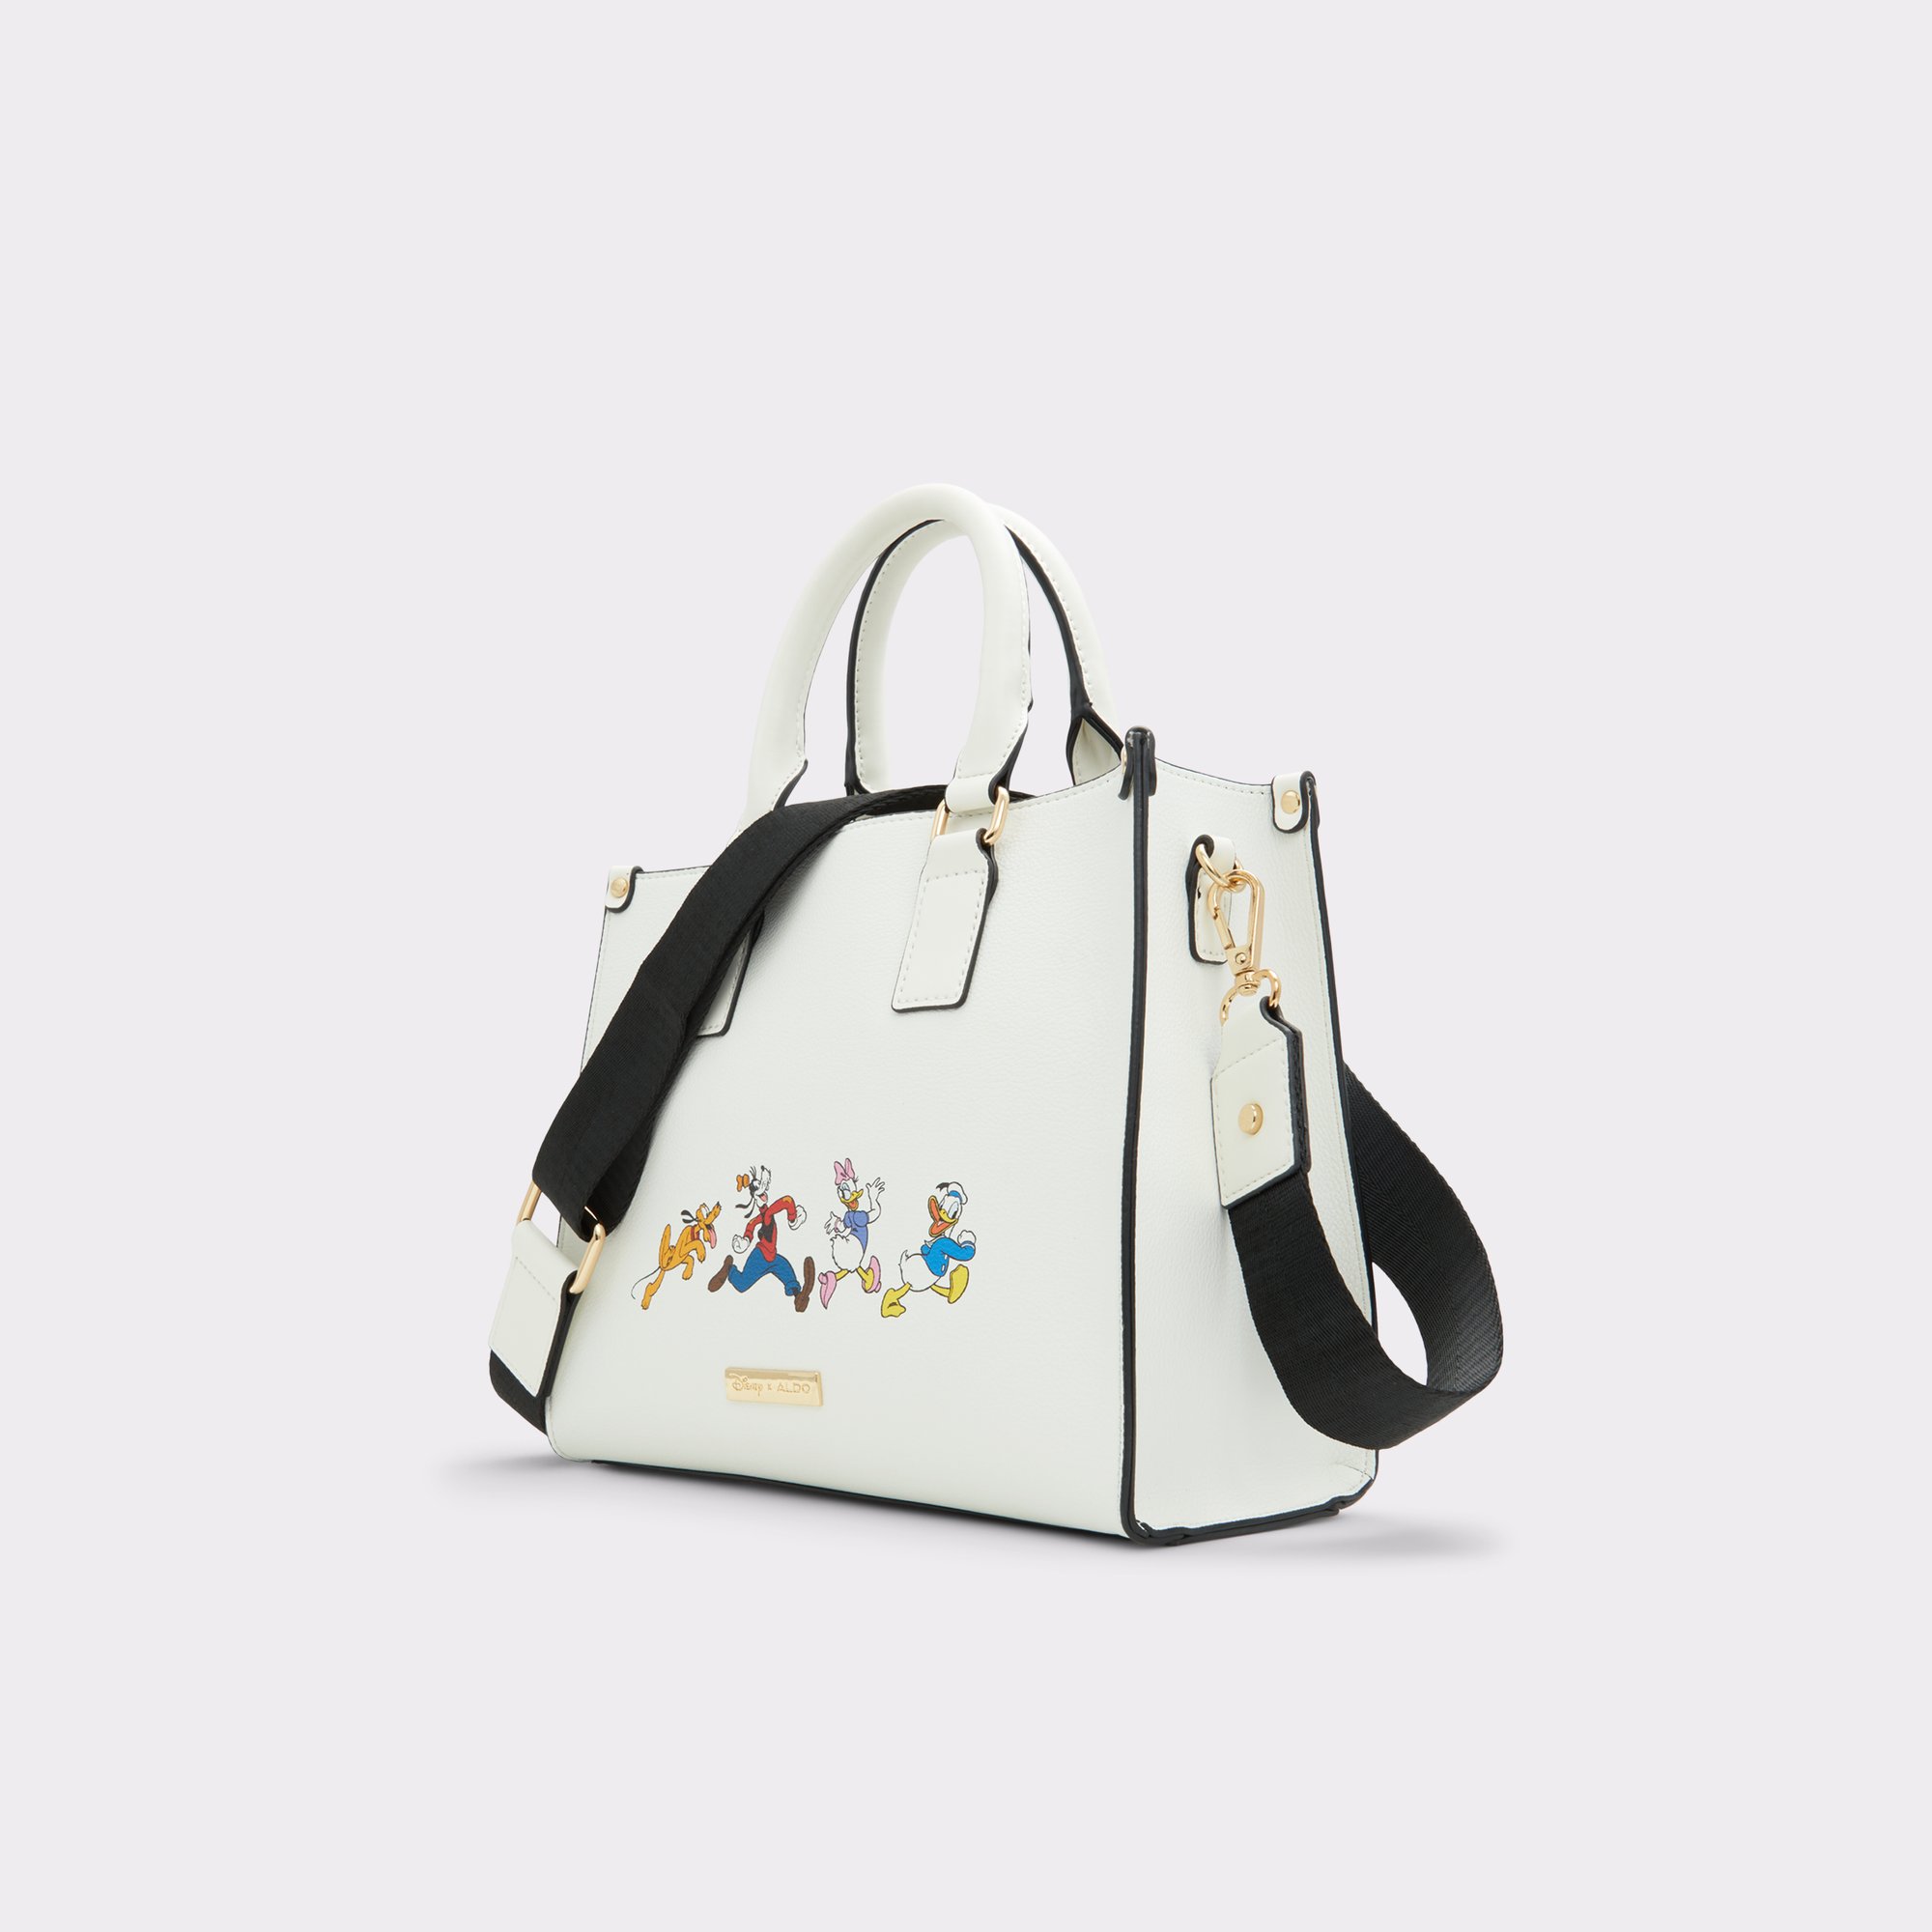 New Arrivals Bag for women by ALDO